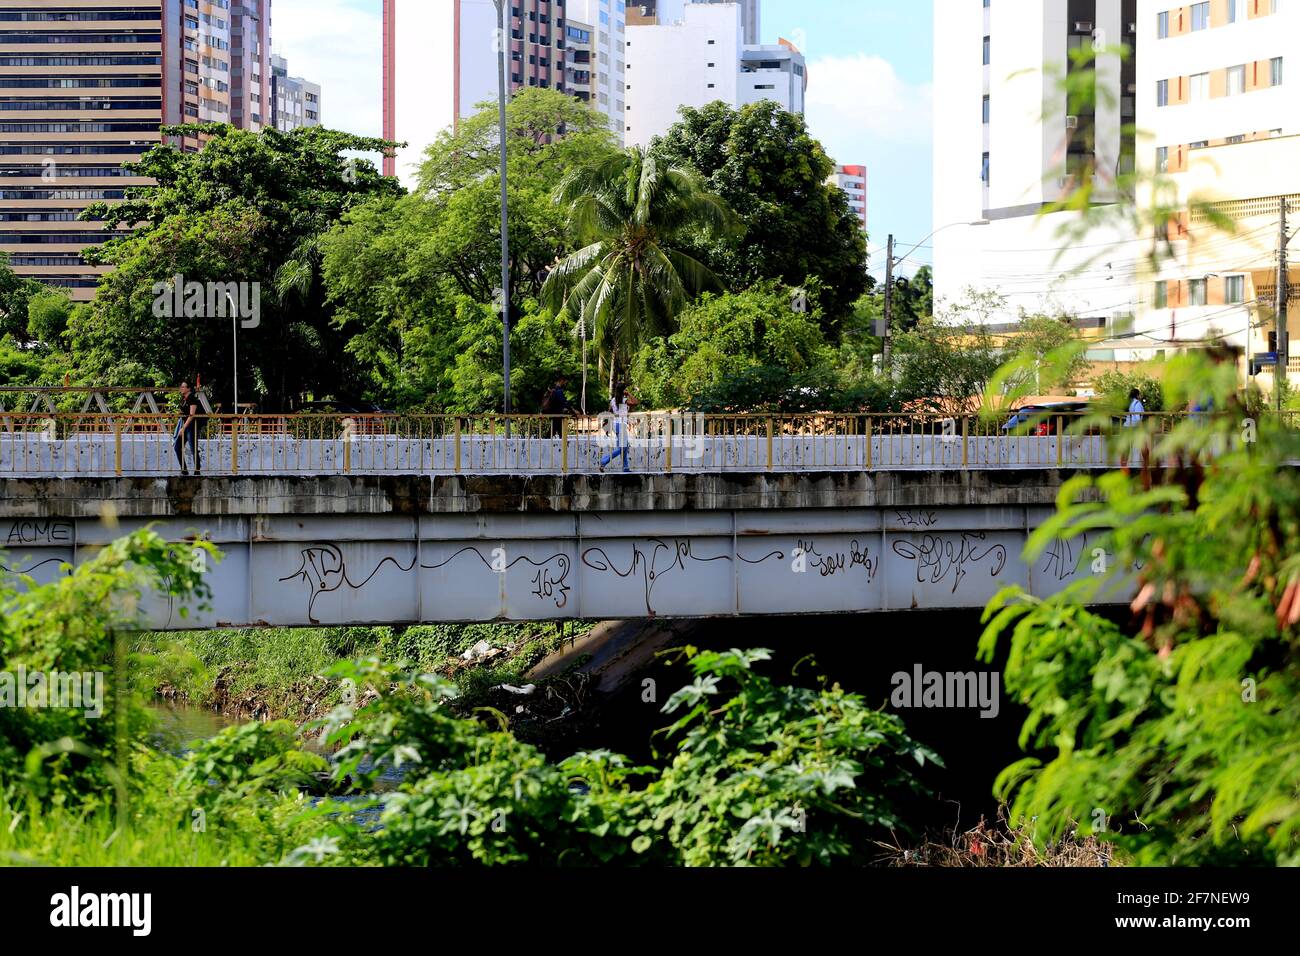 salvador, bahia / brazil - april 17, 2019: bridge is seen with vandalism design in the city of salvador. *** Local Caption *** Stock Photo